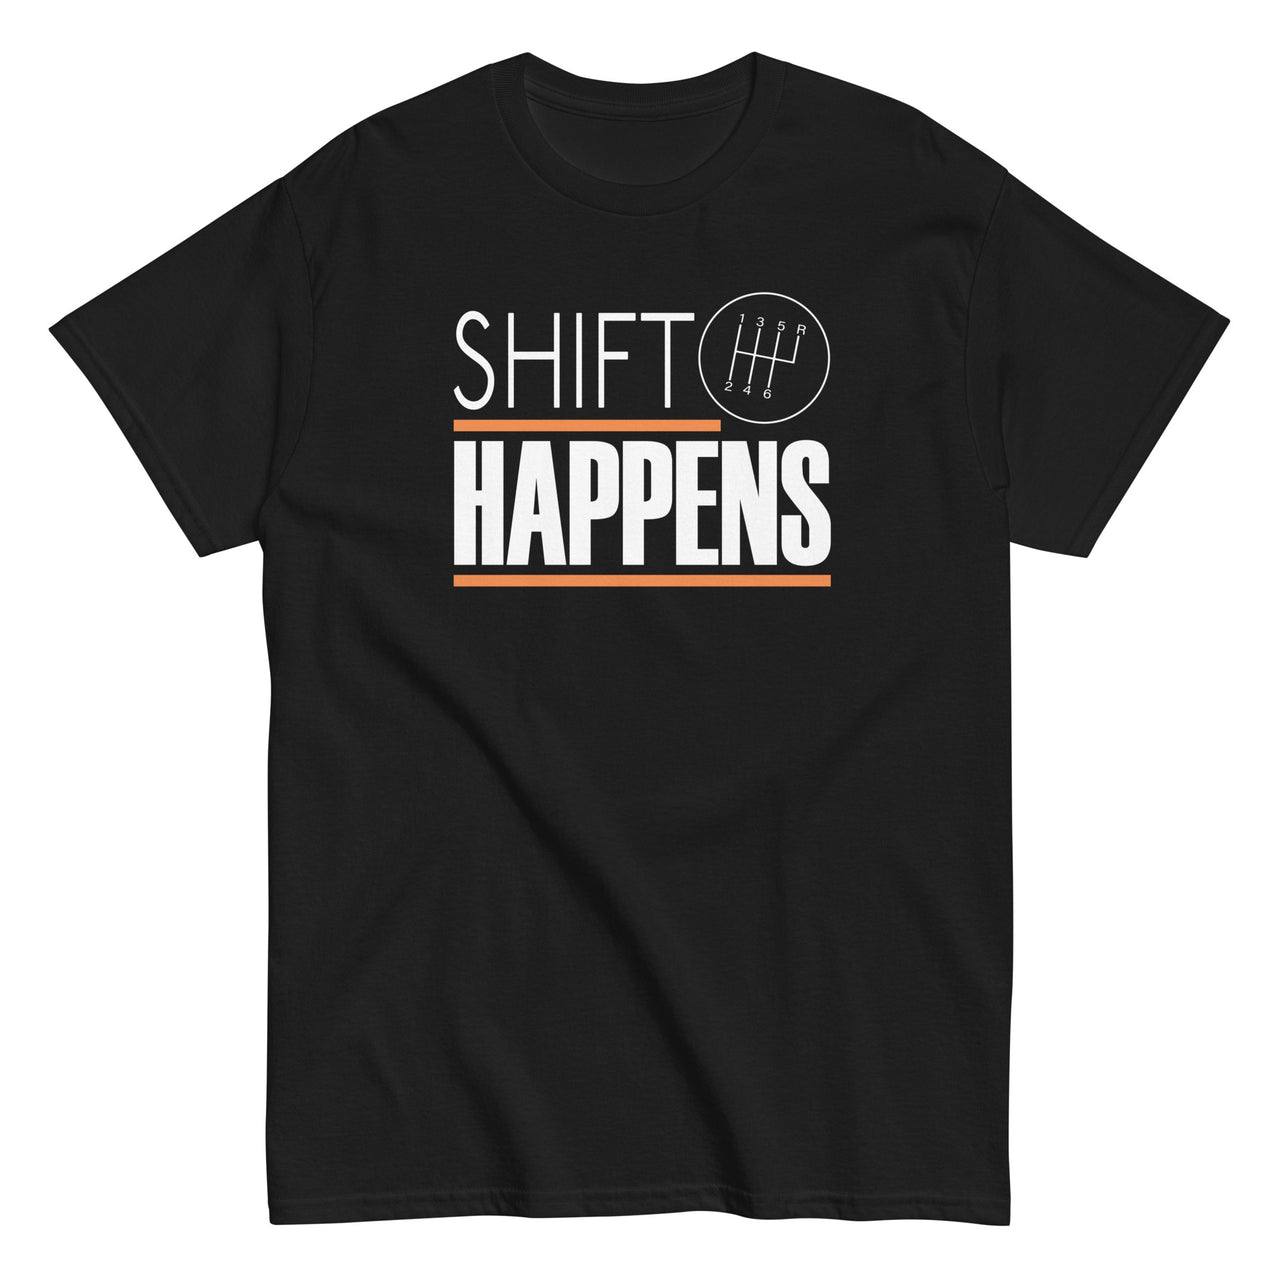 Car Enthusiast T-Shirt, Shift Happens Shirt, Manual Transmission Tee in black